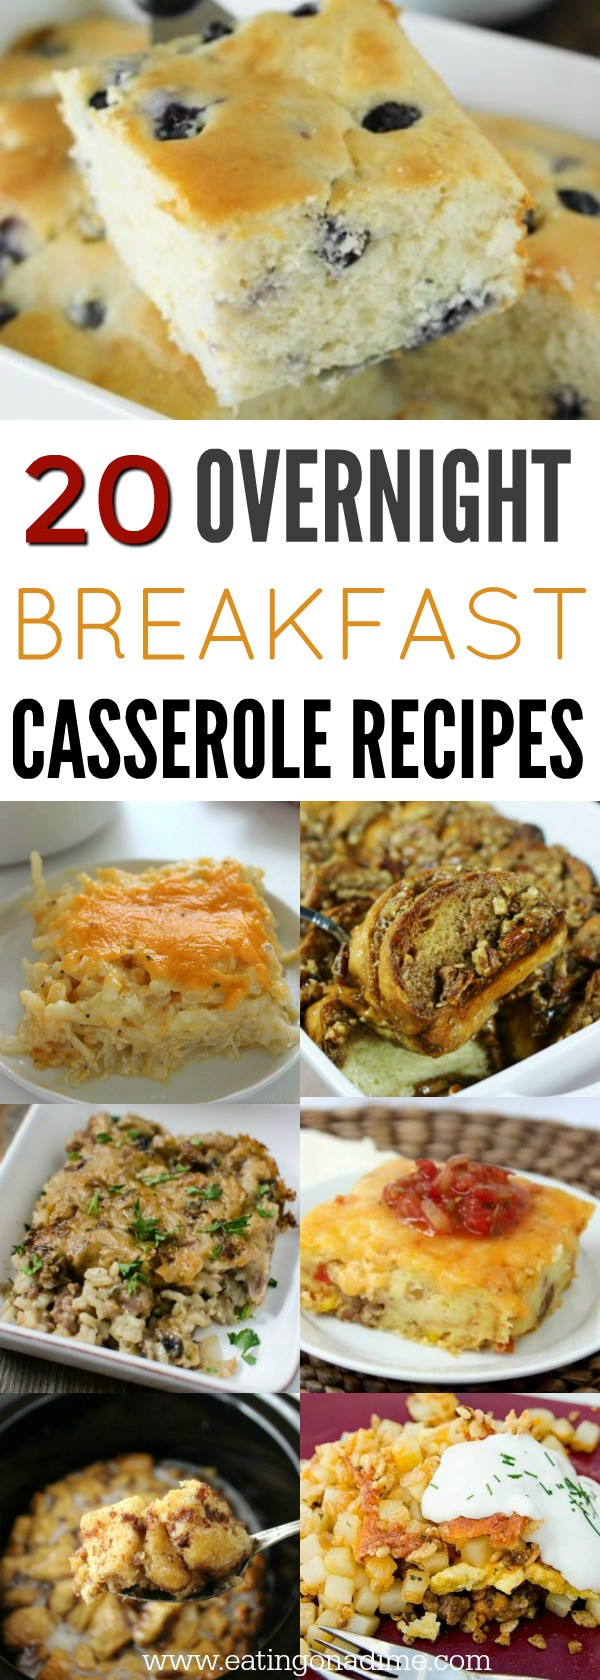 Overnight Breakfast Casserole Recipe
 Overnight Breakfast Casserole Recipes 20 Make Ahead Recipes